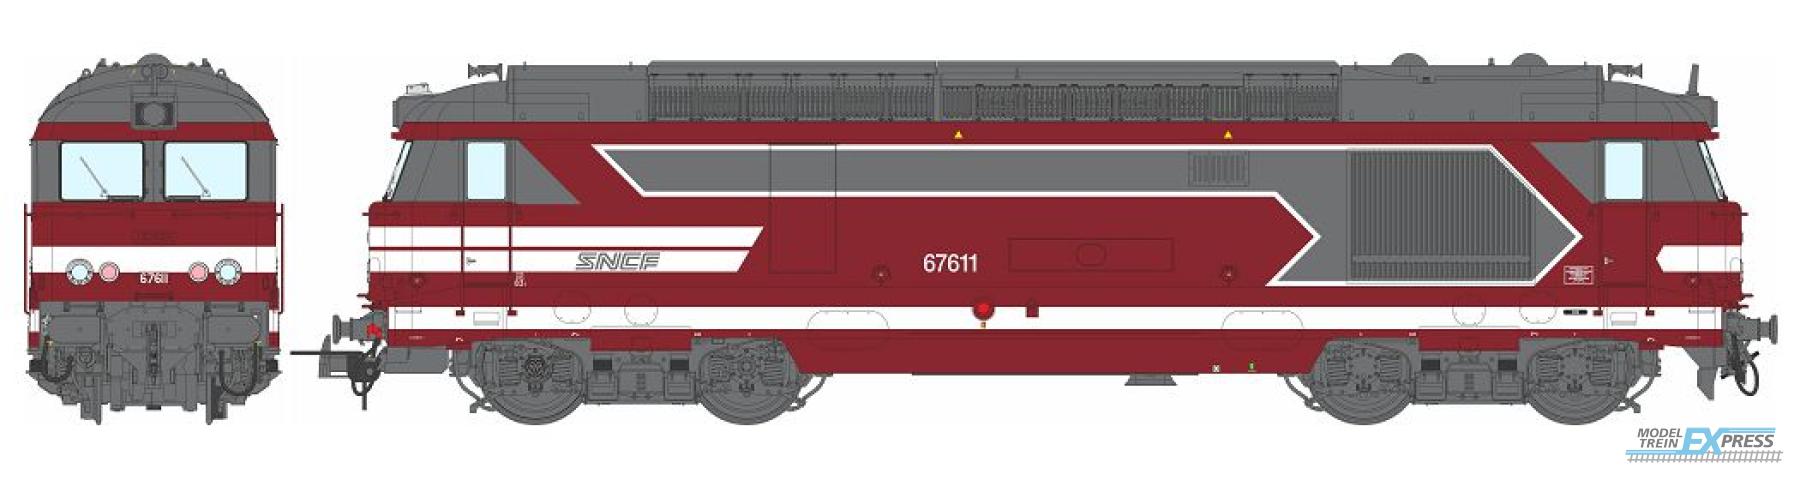 REE models MB-171 BB 67611 RED "CAPITOLE" Era VI - ANALOG